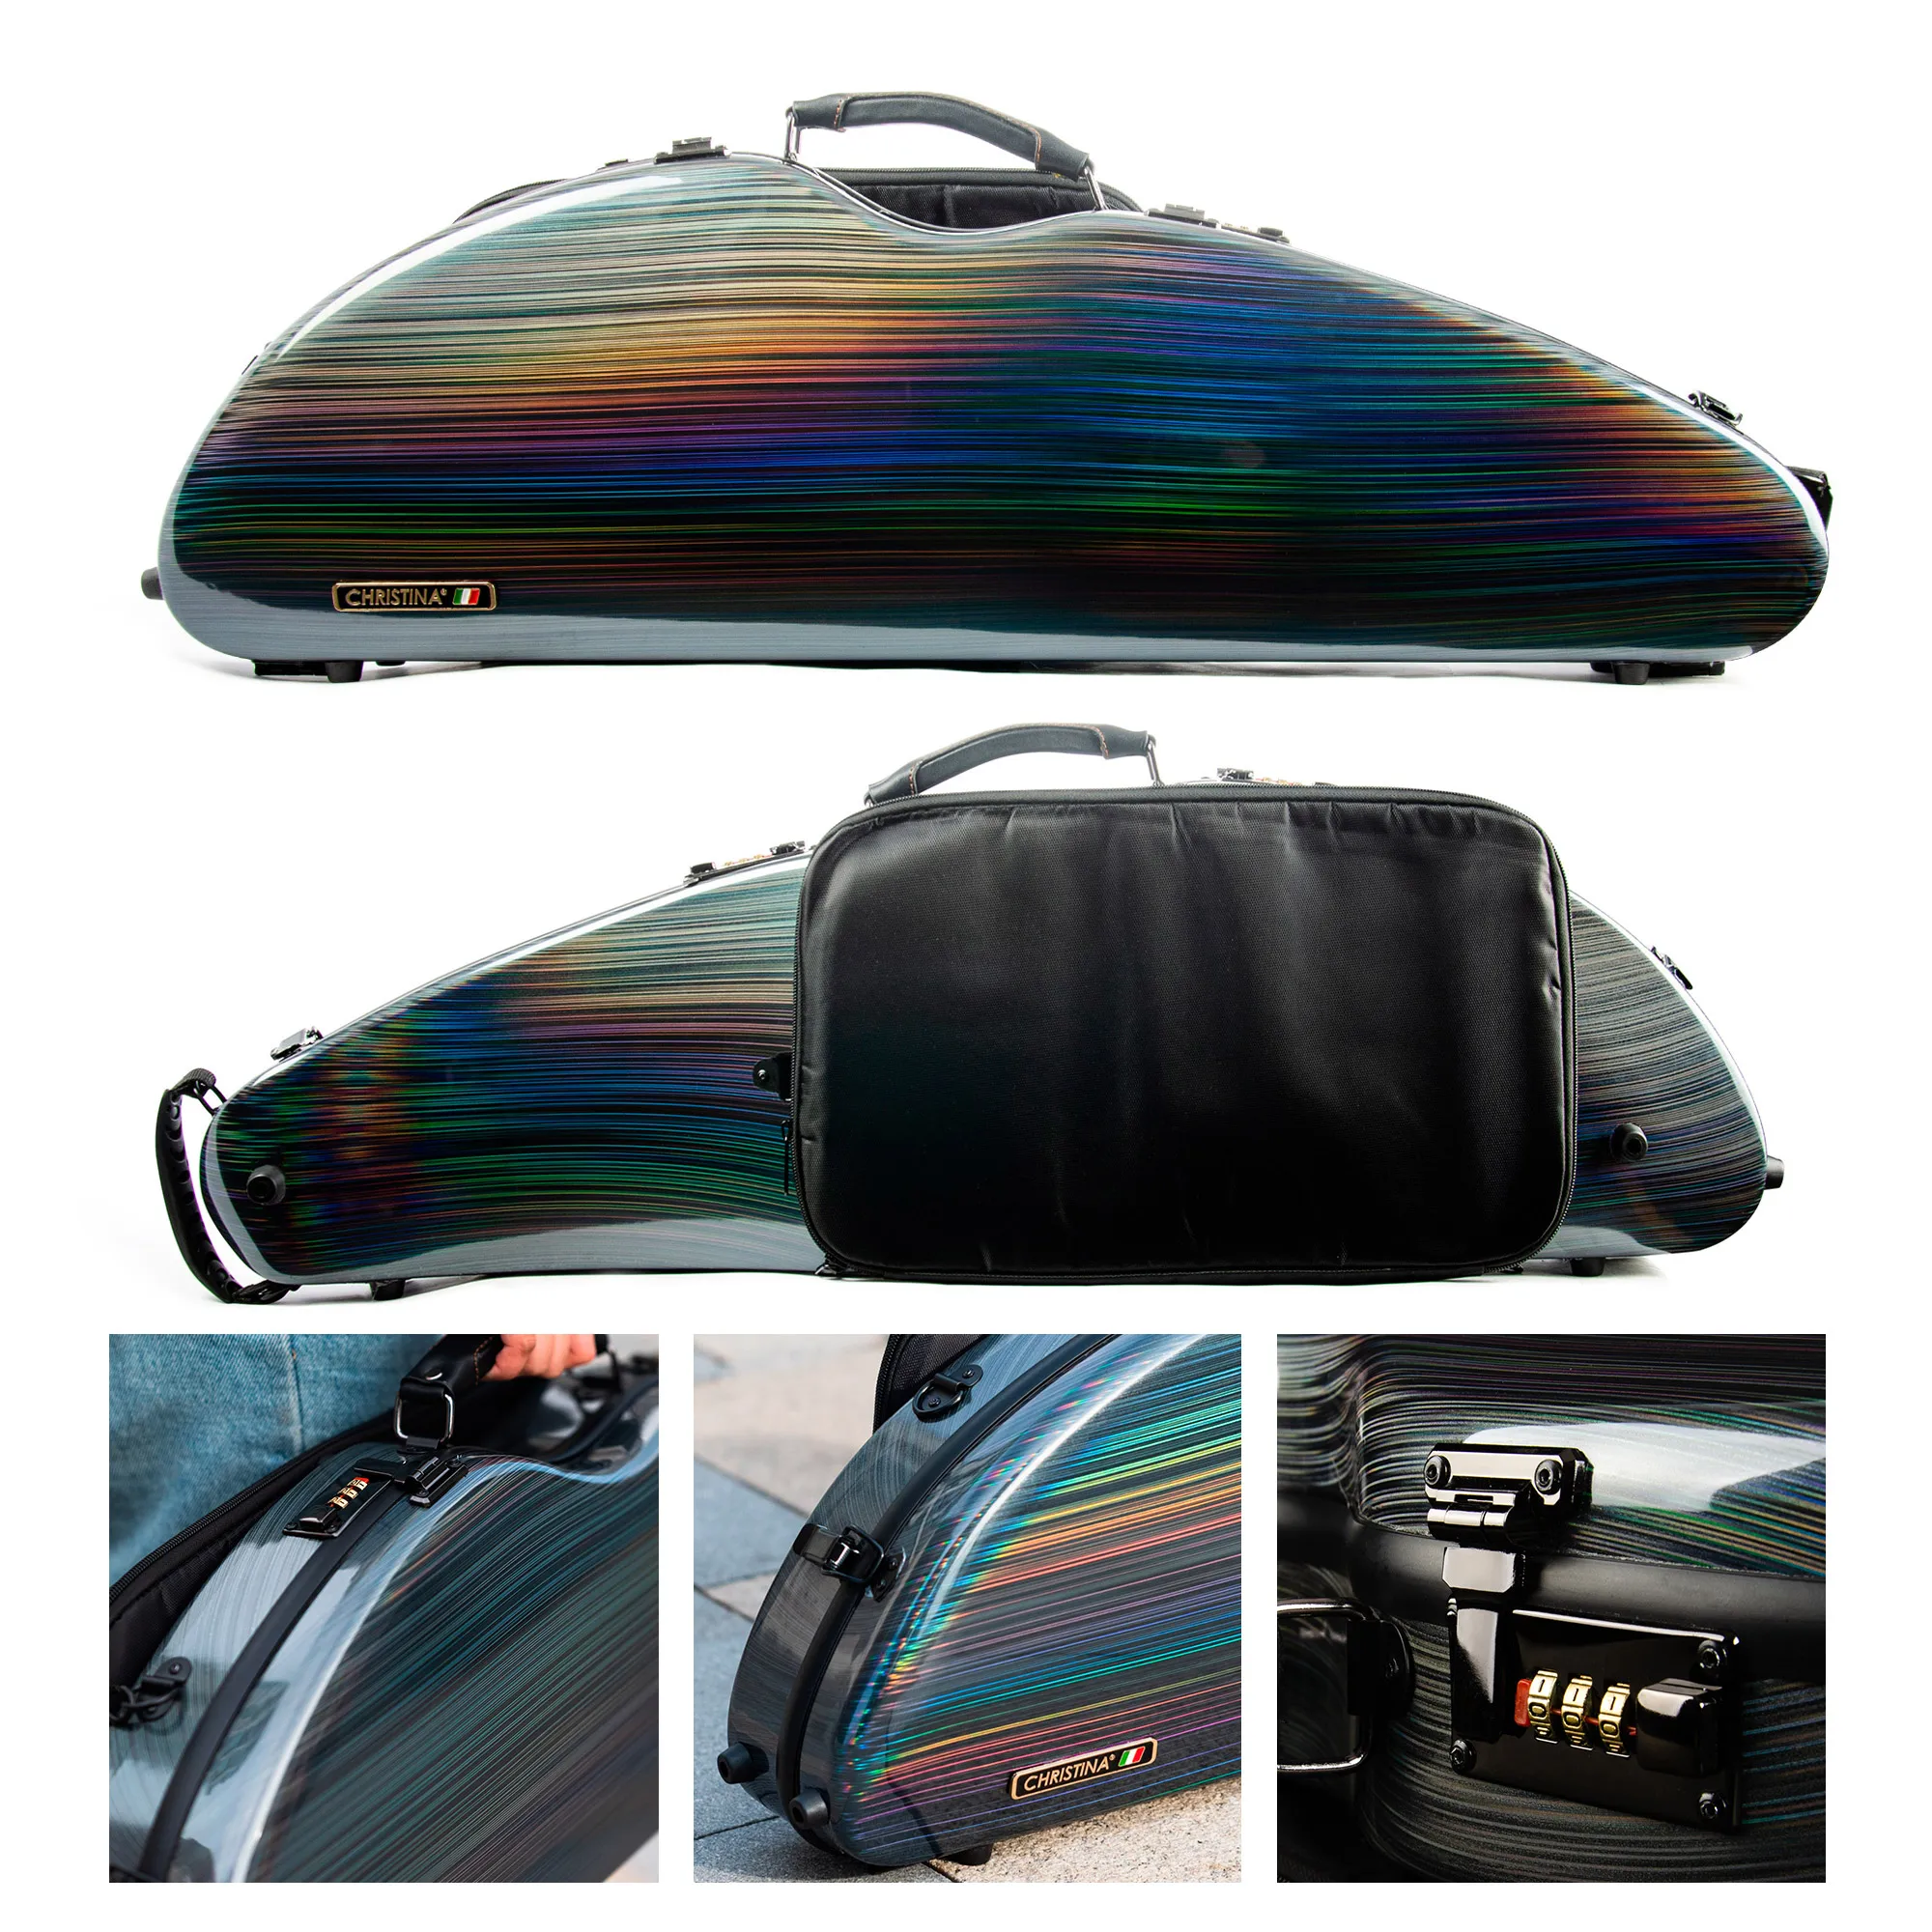 

CHRISTINA Carbon Fiber Violin Case, New Widened Triangle BV05RG Rainbow, Waterproof Lightweight, with Sheet Music Bag Code Lock